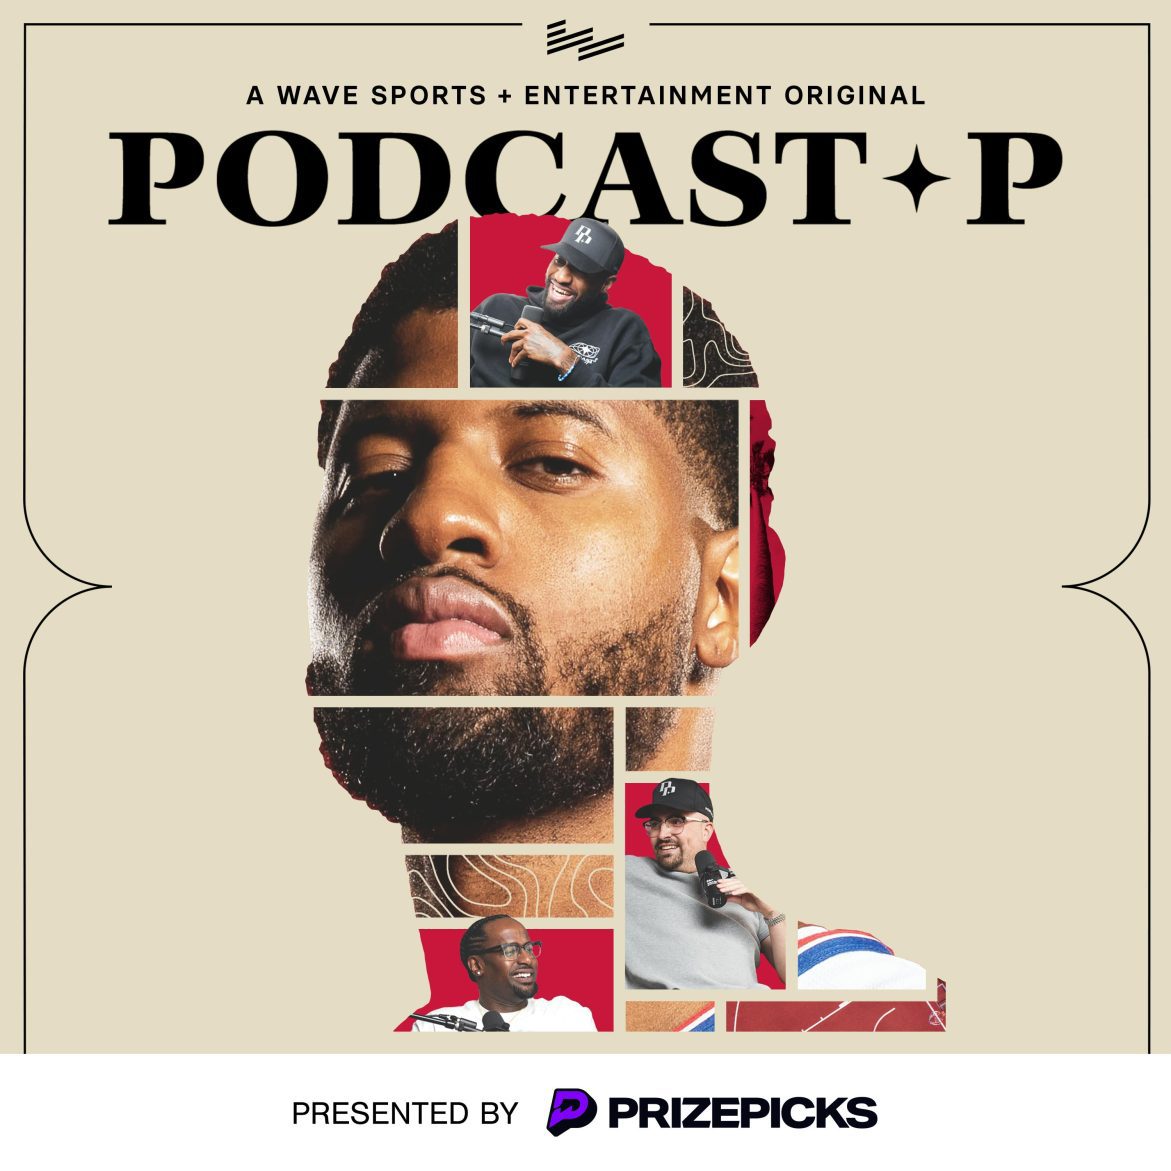 Black Podcasting - Paul George Recaps Game 4 vs Mavericks, His Tough 4th Quarter 3-Pointer, Kyrie’s Wild Layup & More